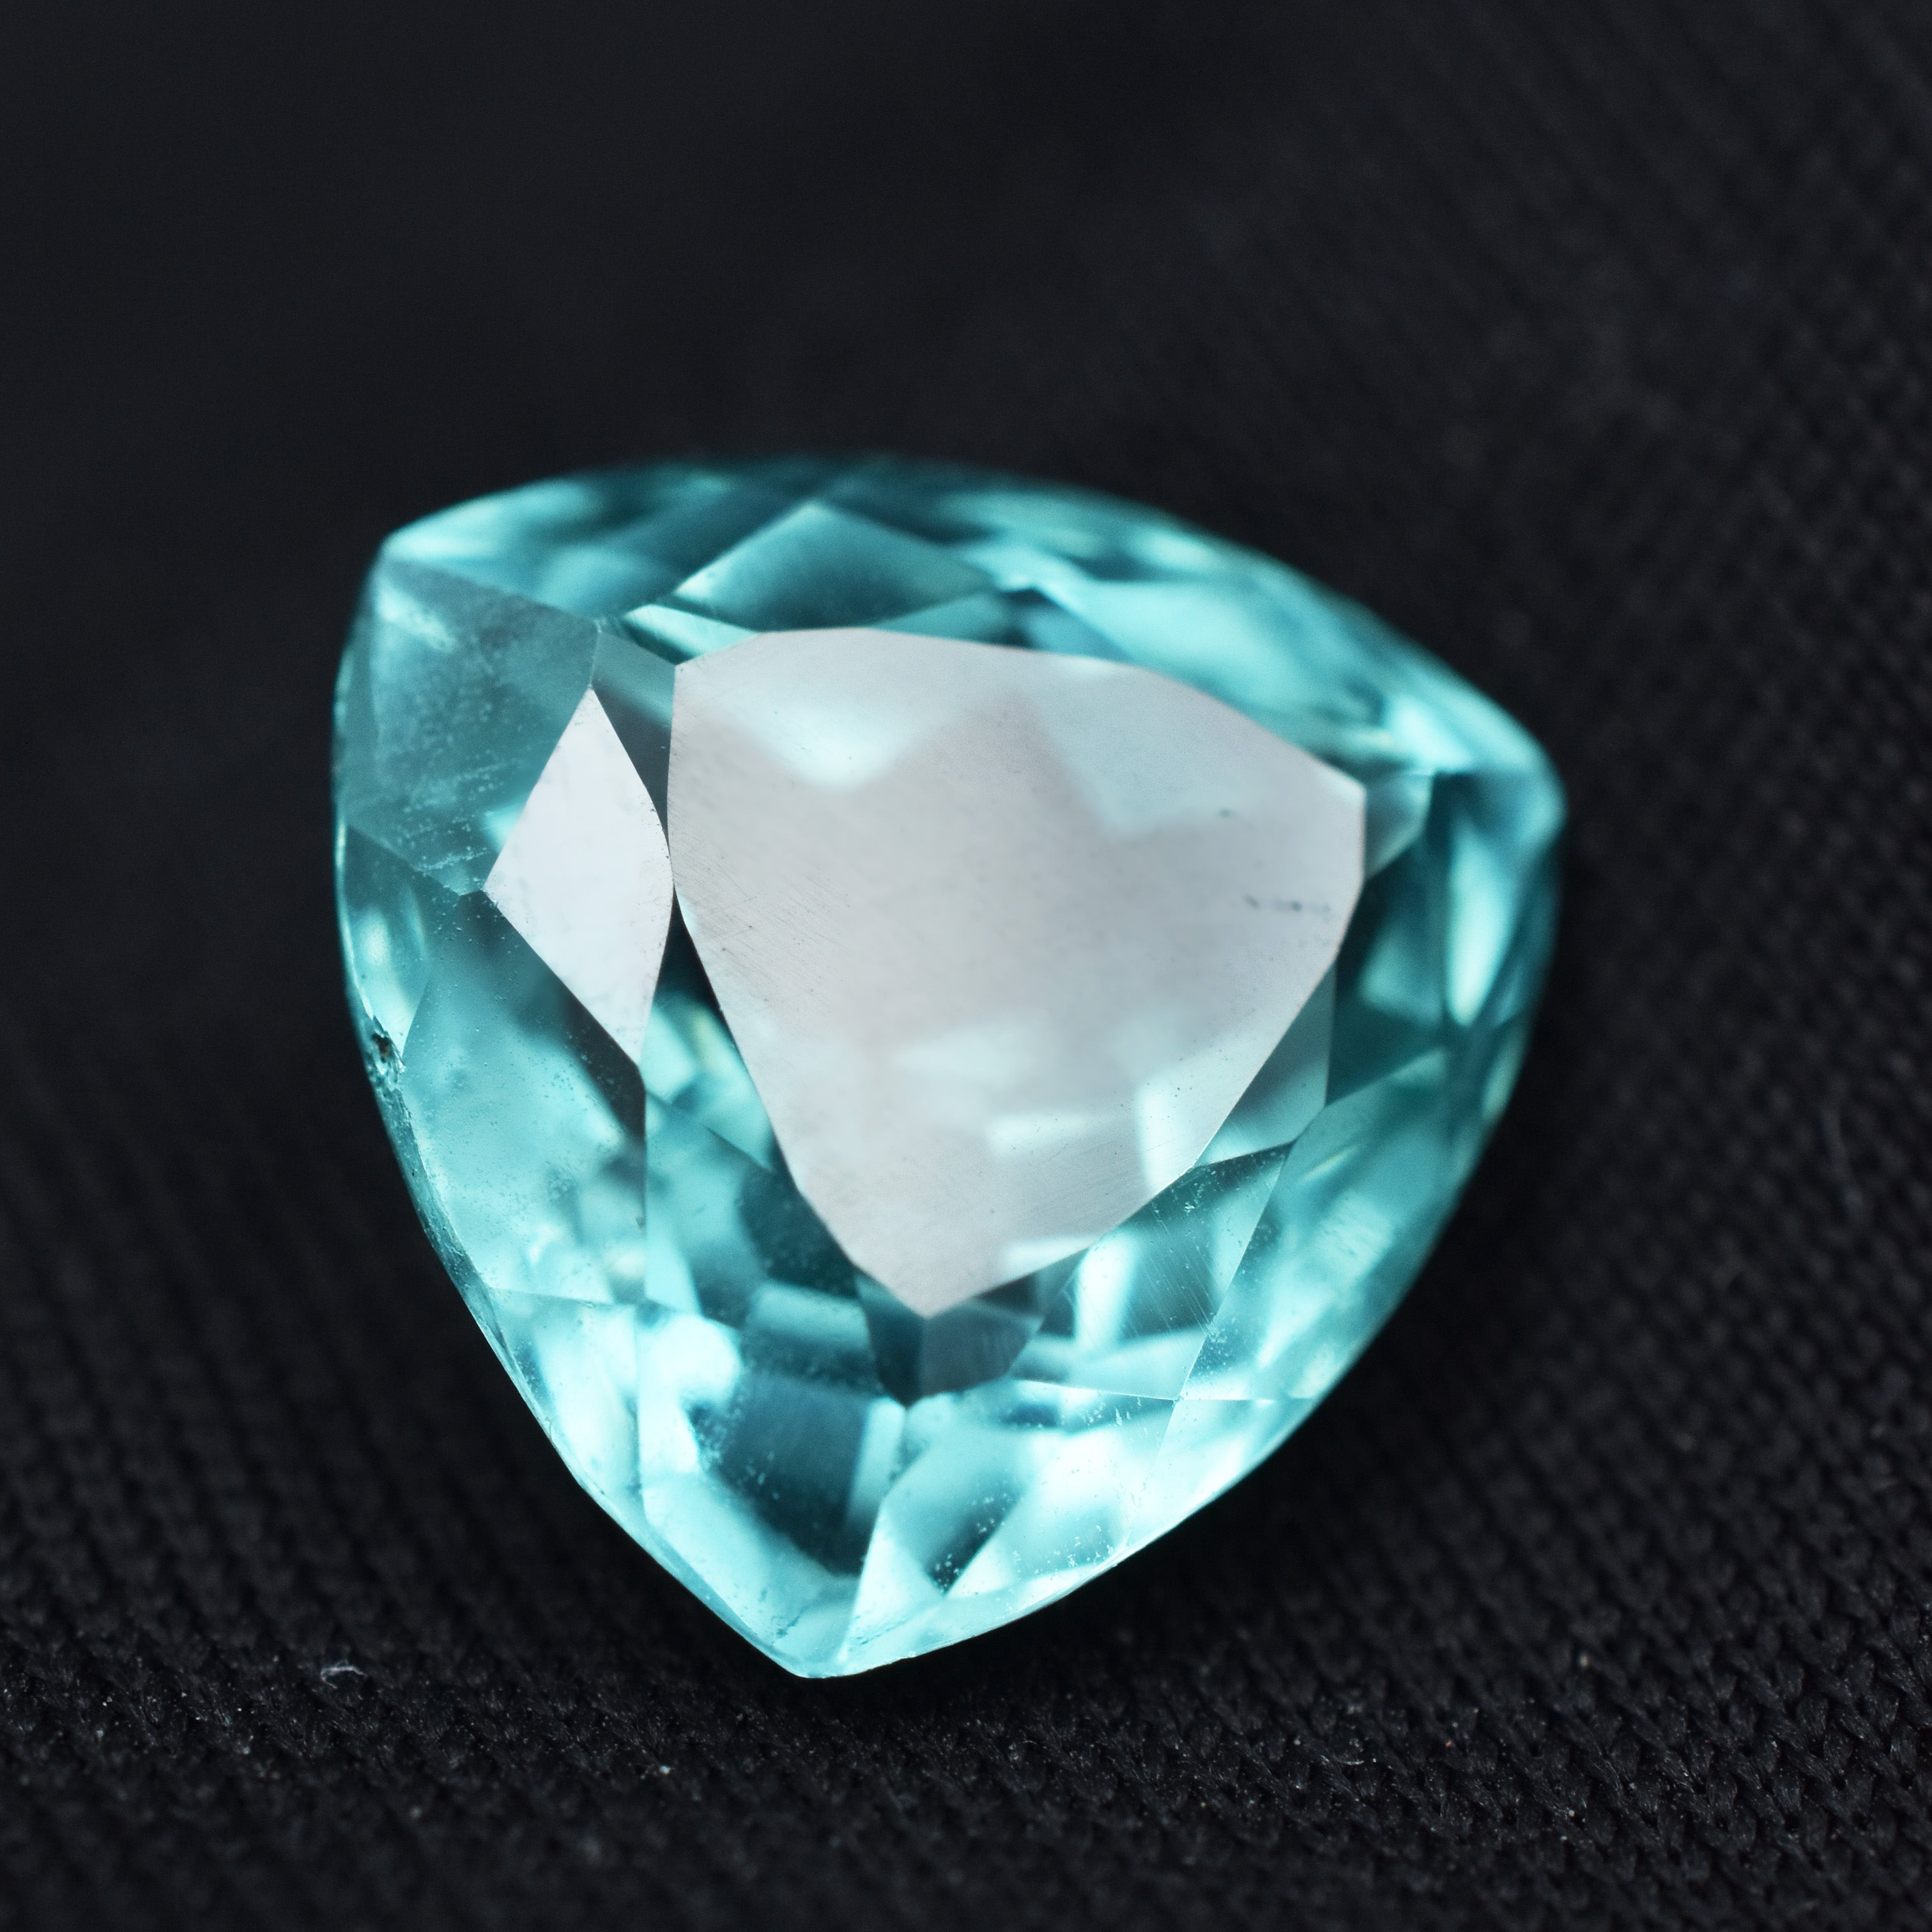 Sapphire Bluish Green 7.80 Carat Trillion Cut Natural Certified Loose Gemstone Jewelry Making Gemstone